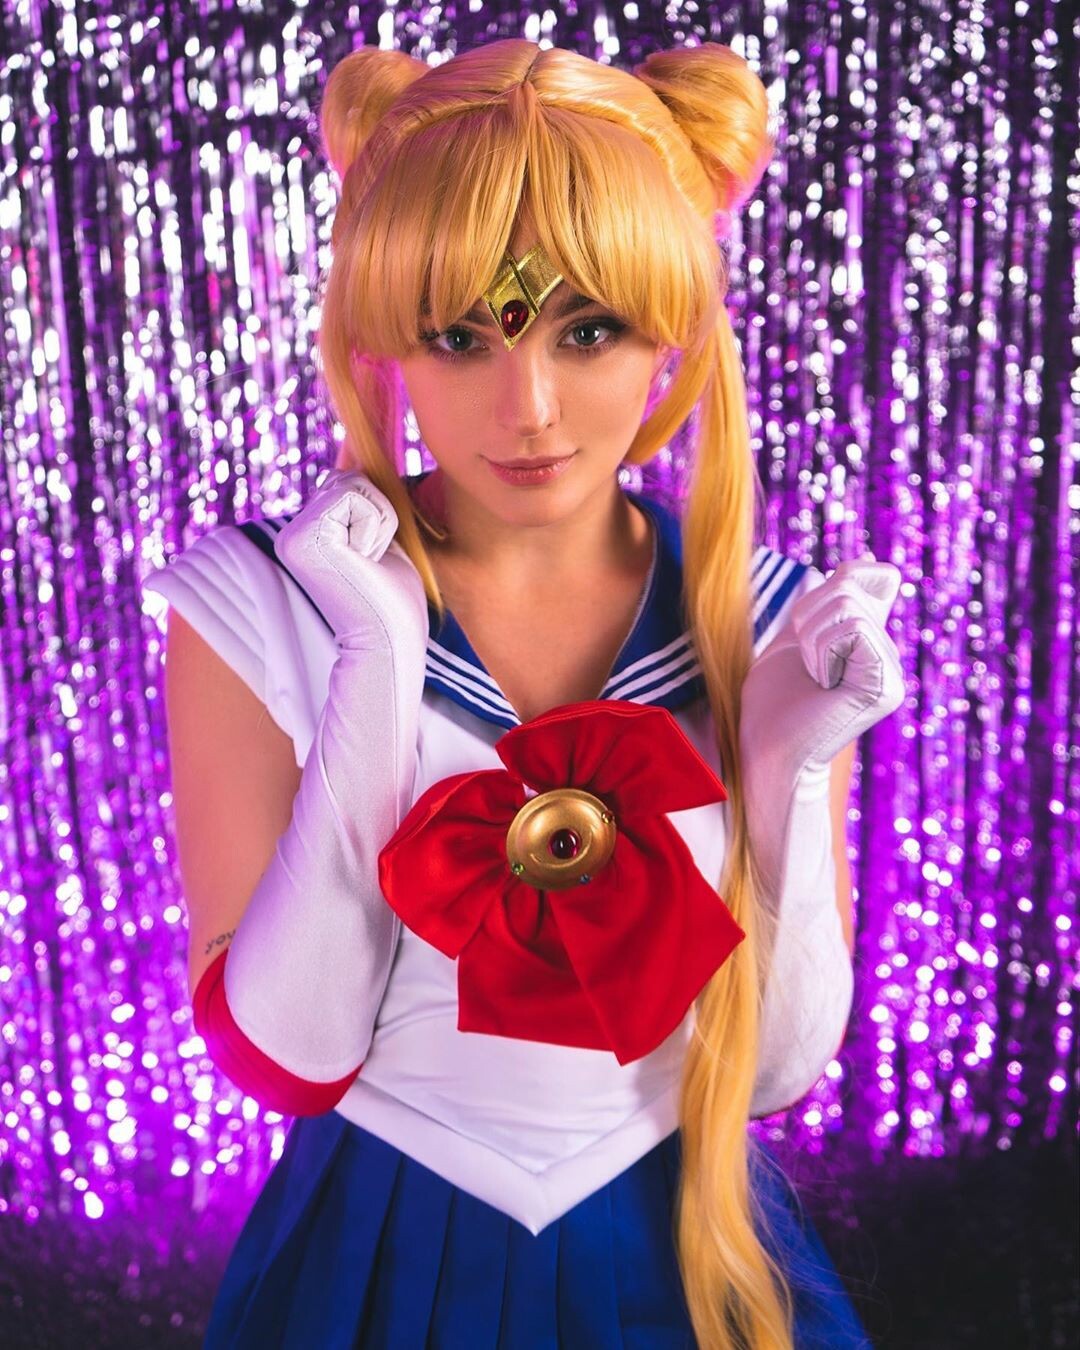 Cosplay Usagi Tsukino from Sailor Moon.